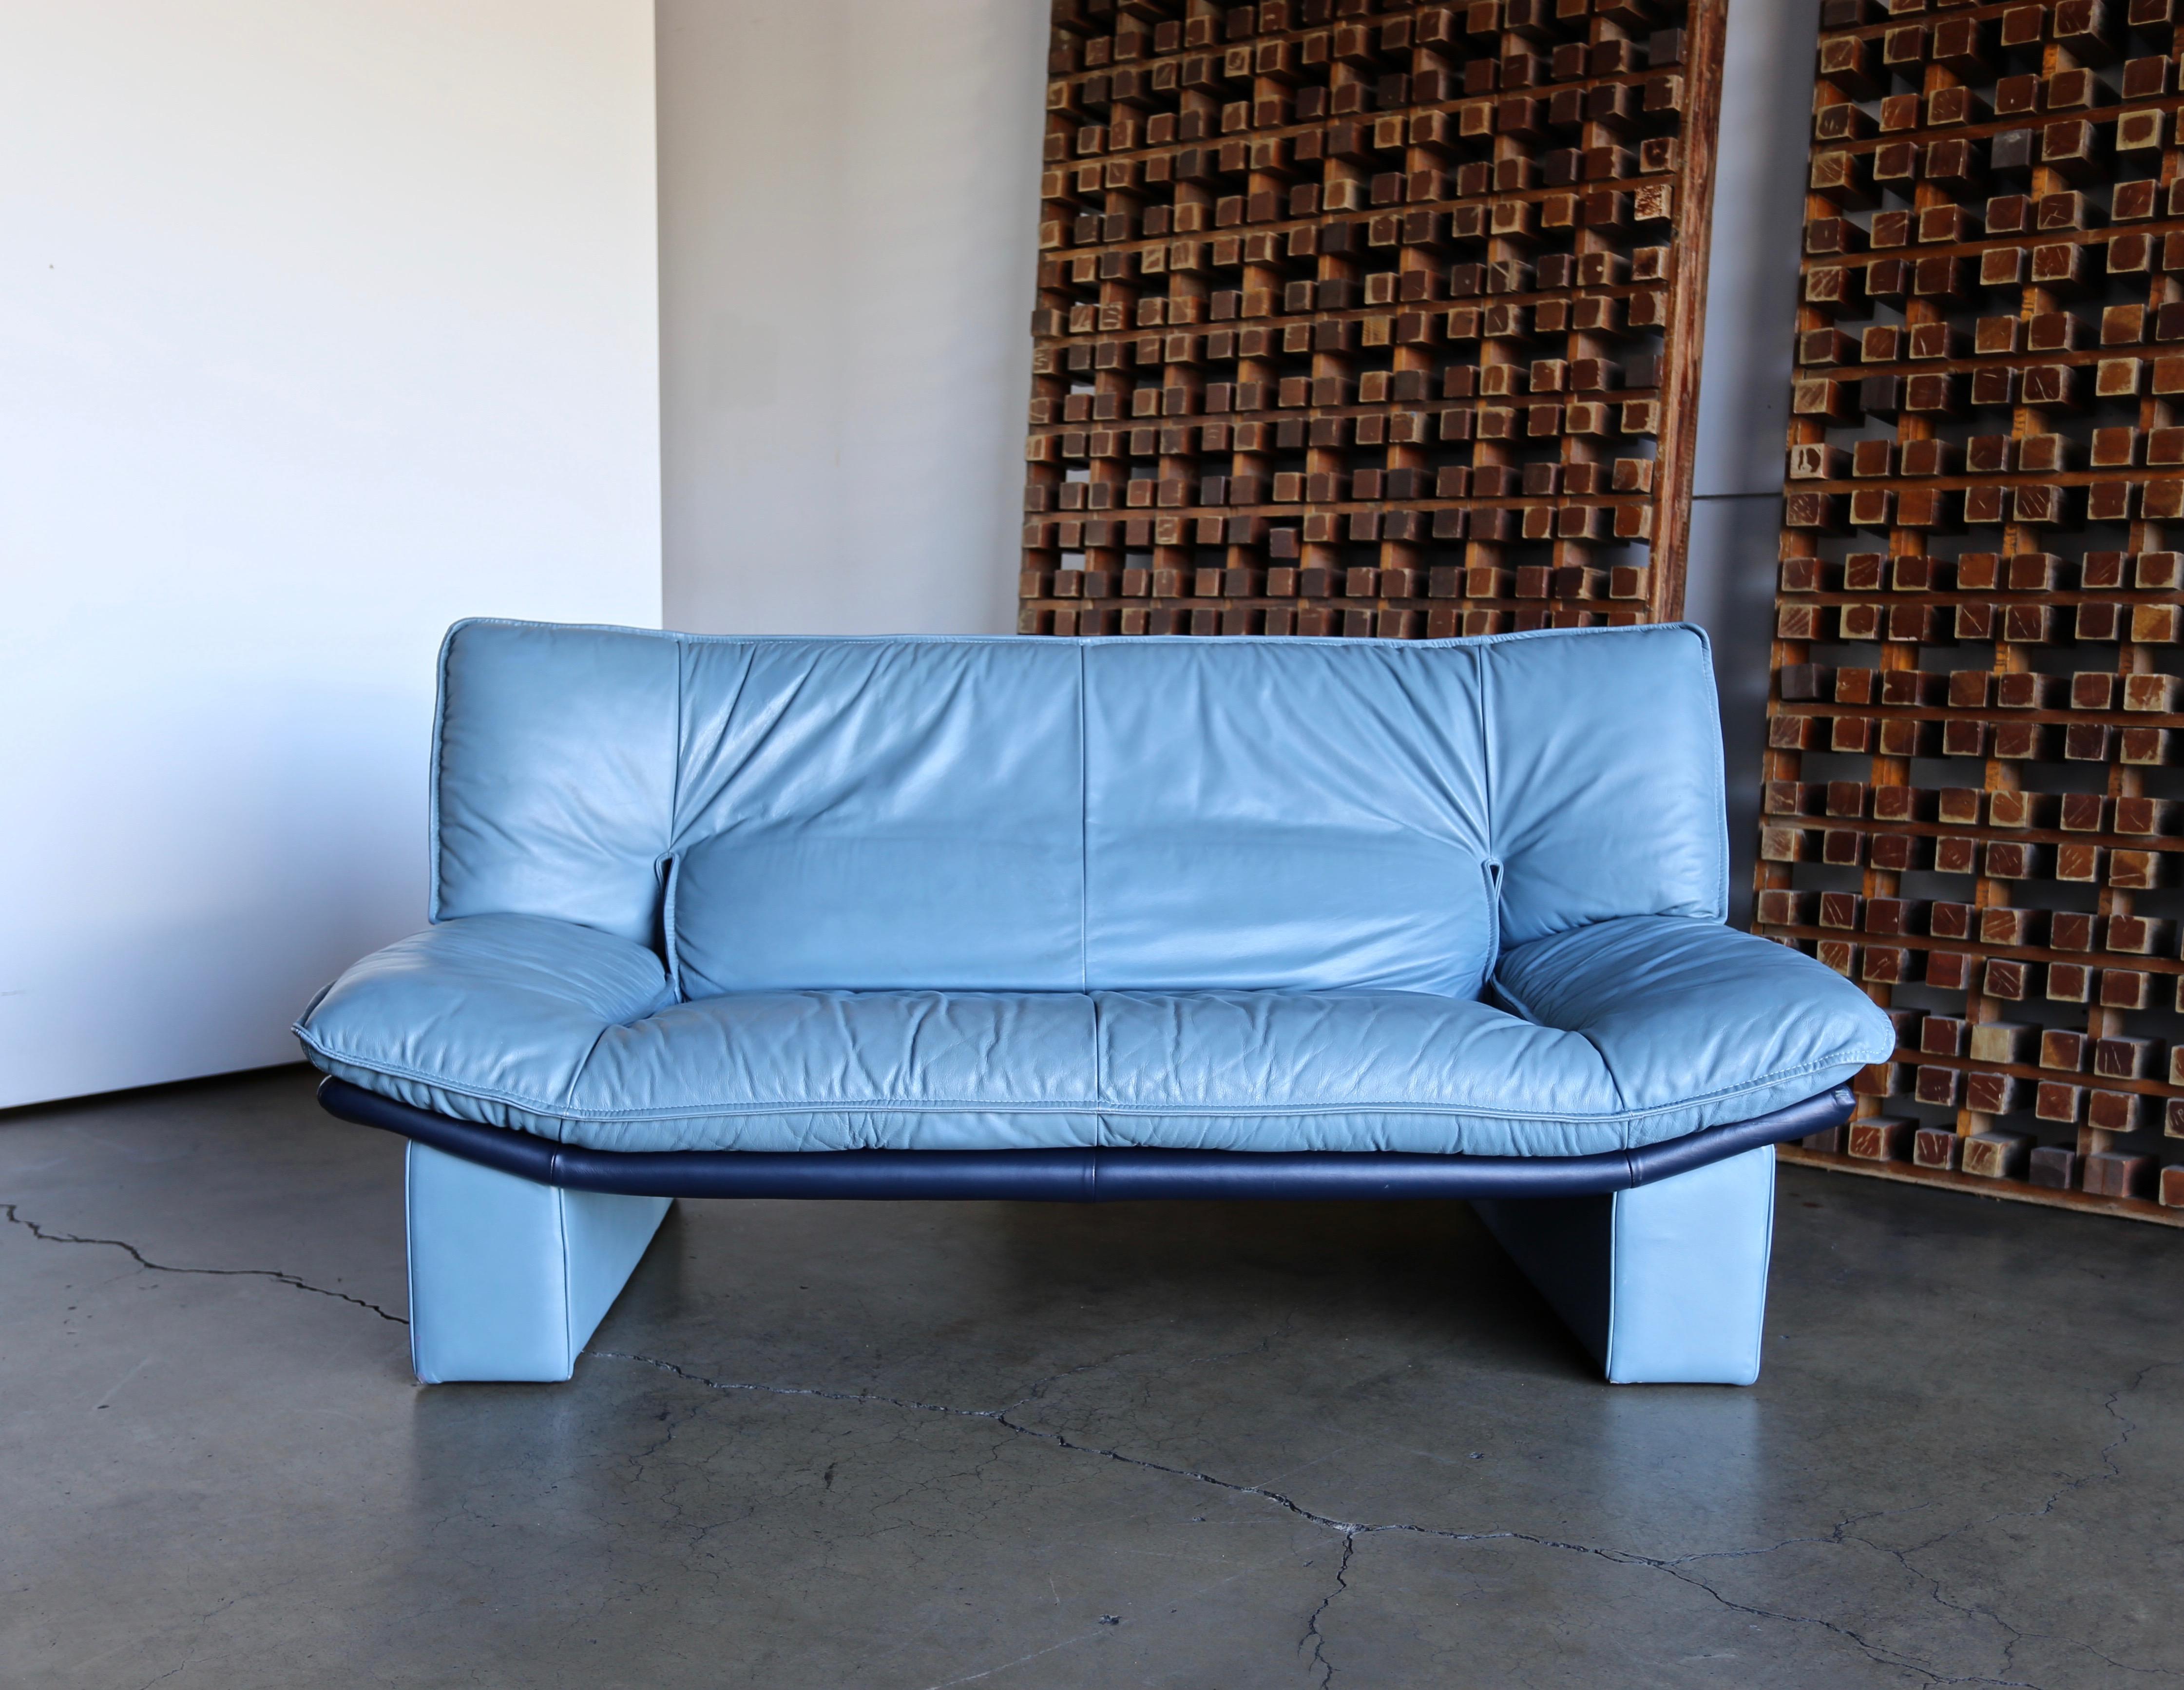 Nicoletti Salotti Postmodern Italian blue leather settee / sofa, circa 1980.

   